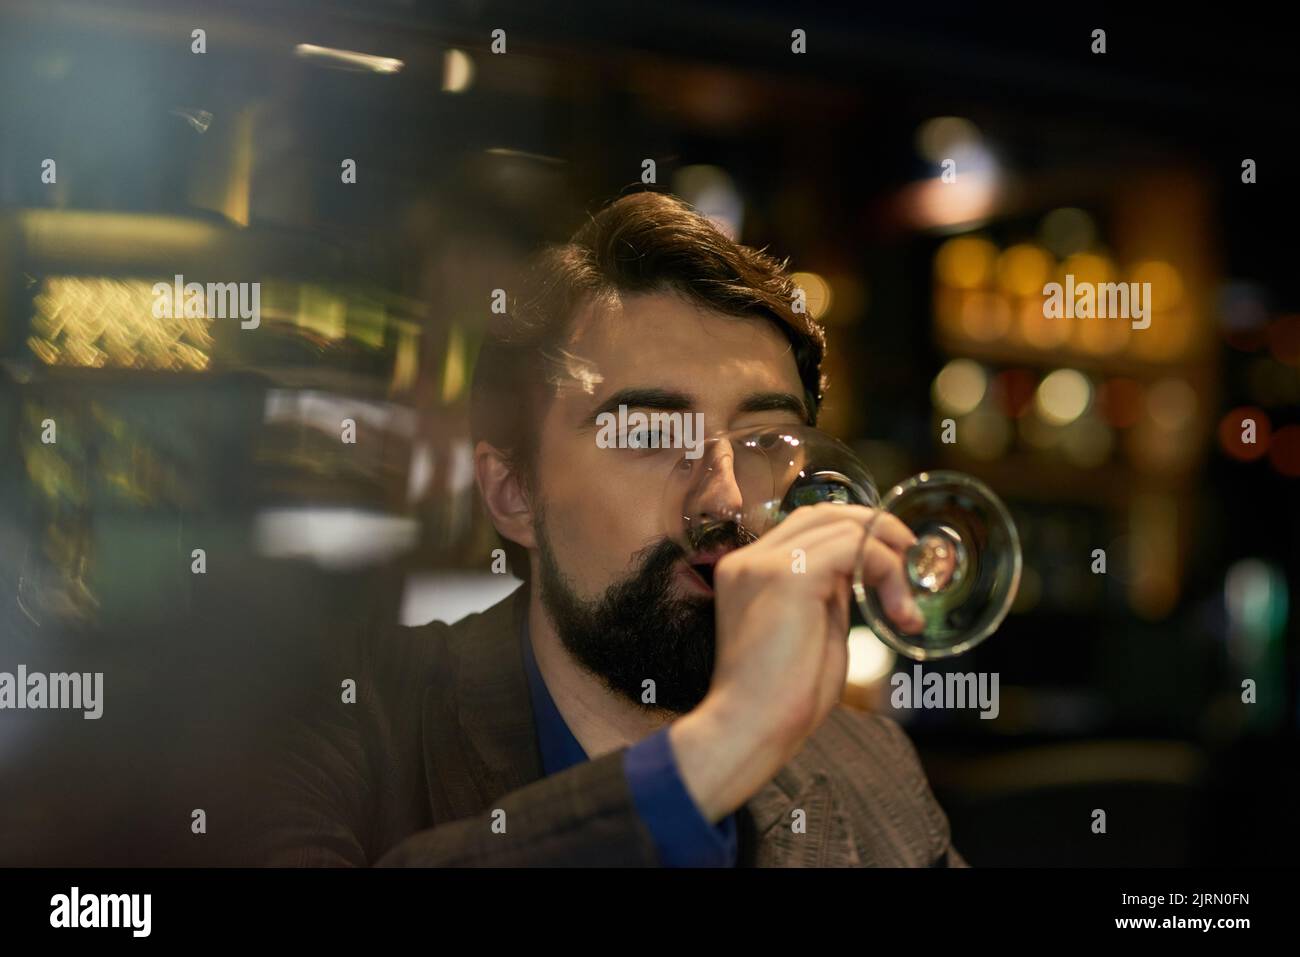 Man drinking wine in bar or restaurant Stock Photo